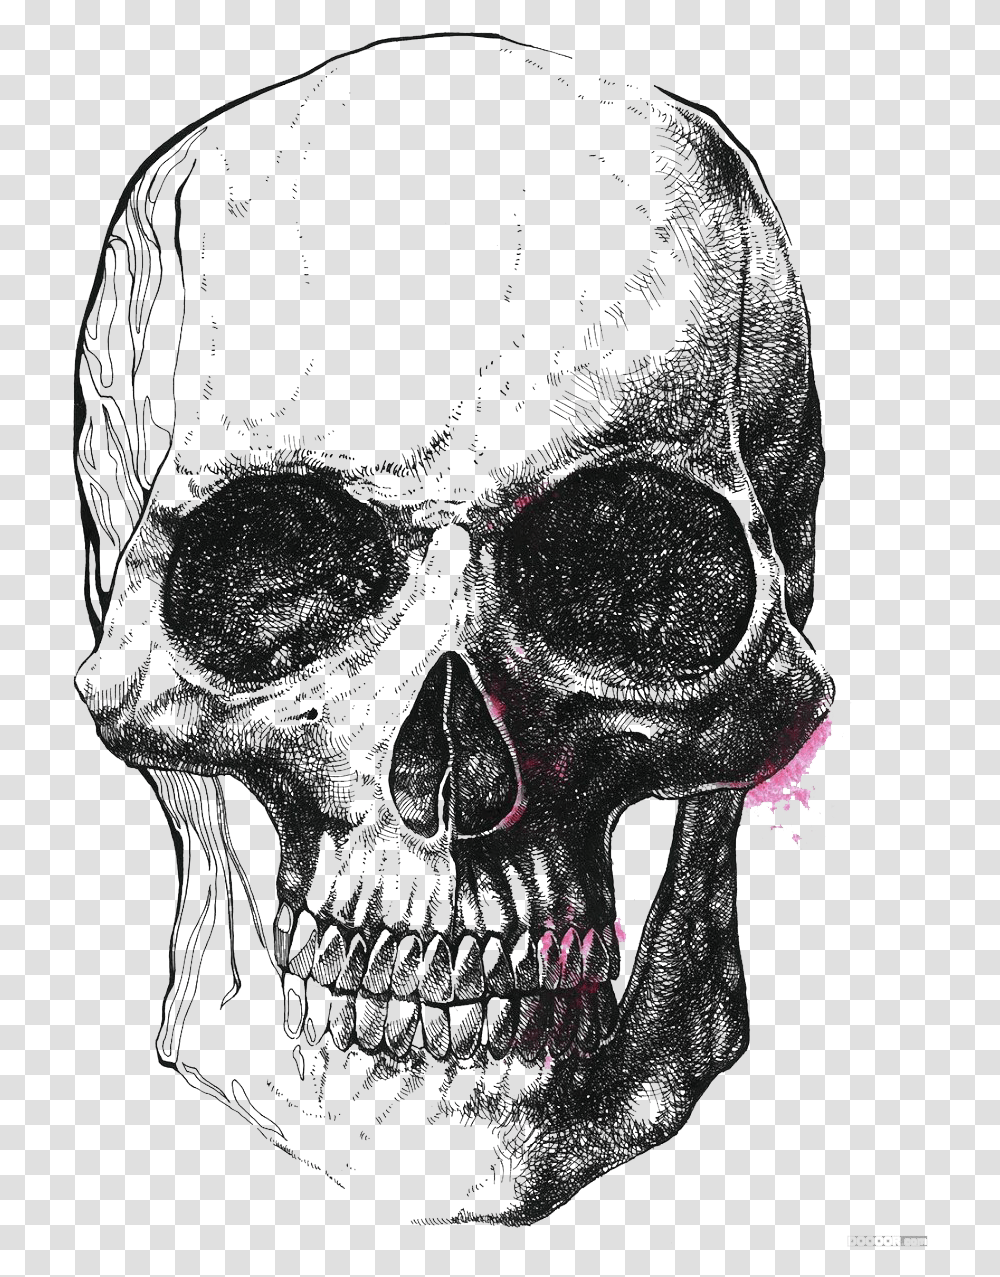 Human Skull Symbolism Illustration Black And White Sketch, Alien, Skeleton, Person, X-Ray Transparent Png